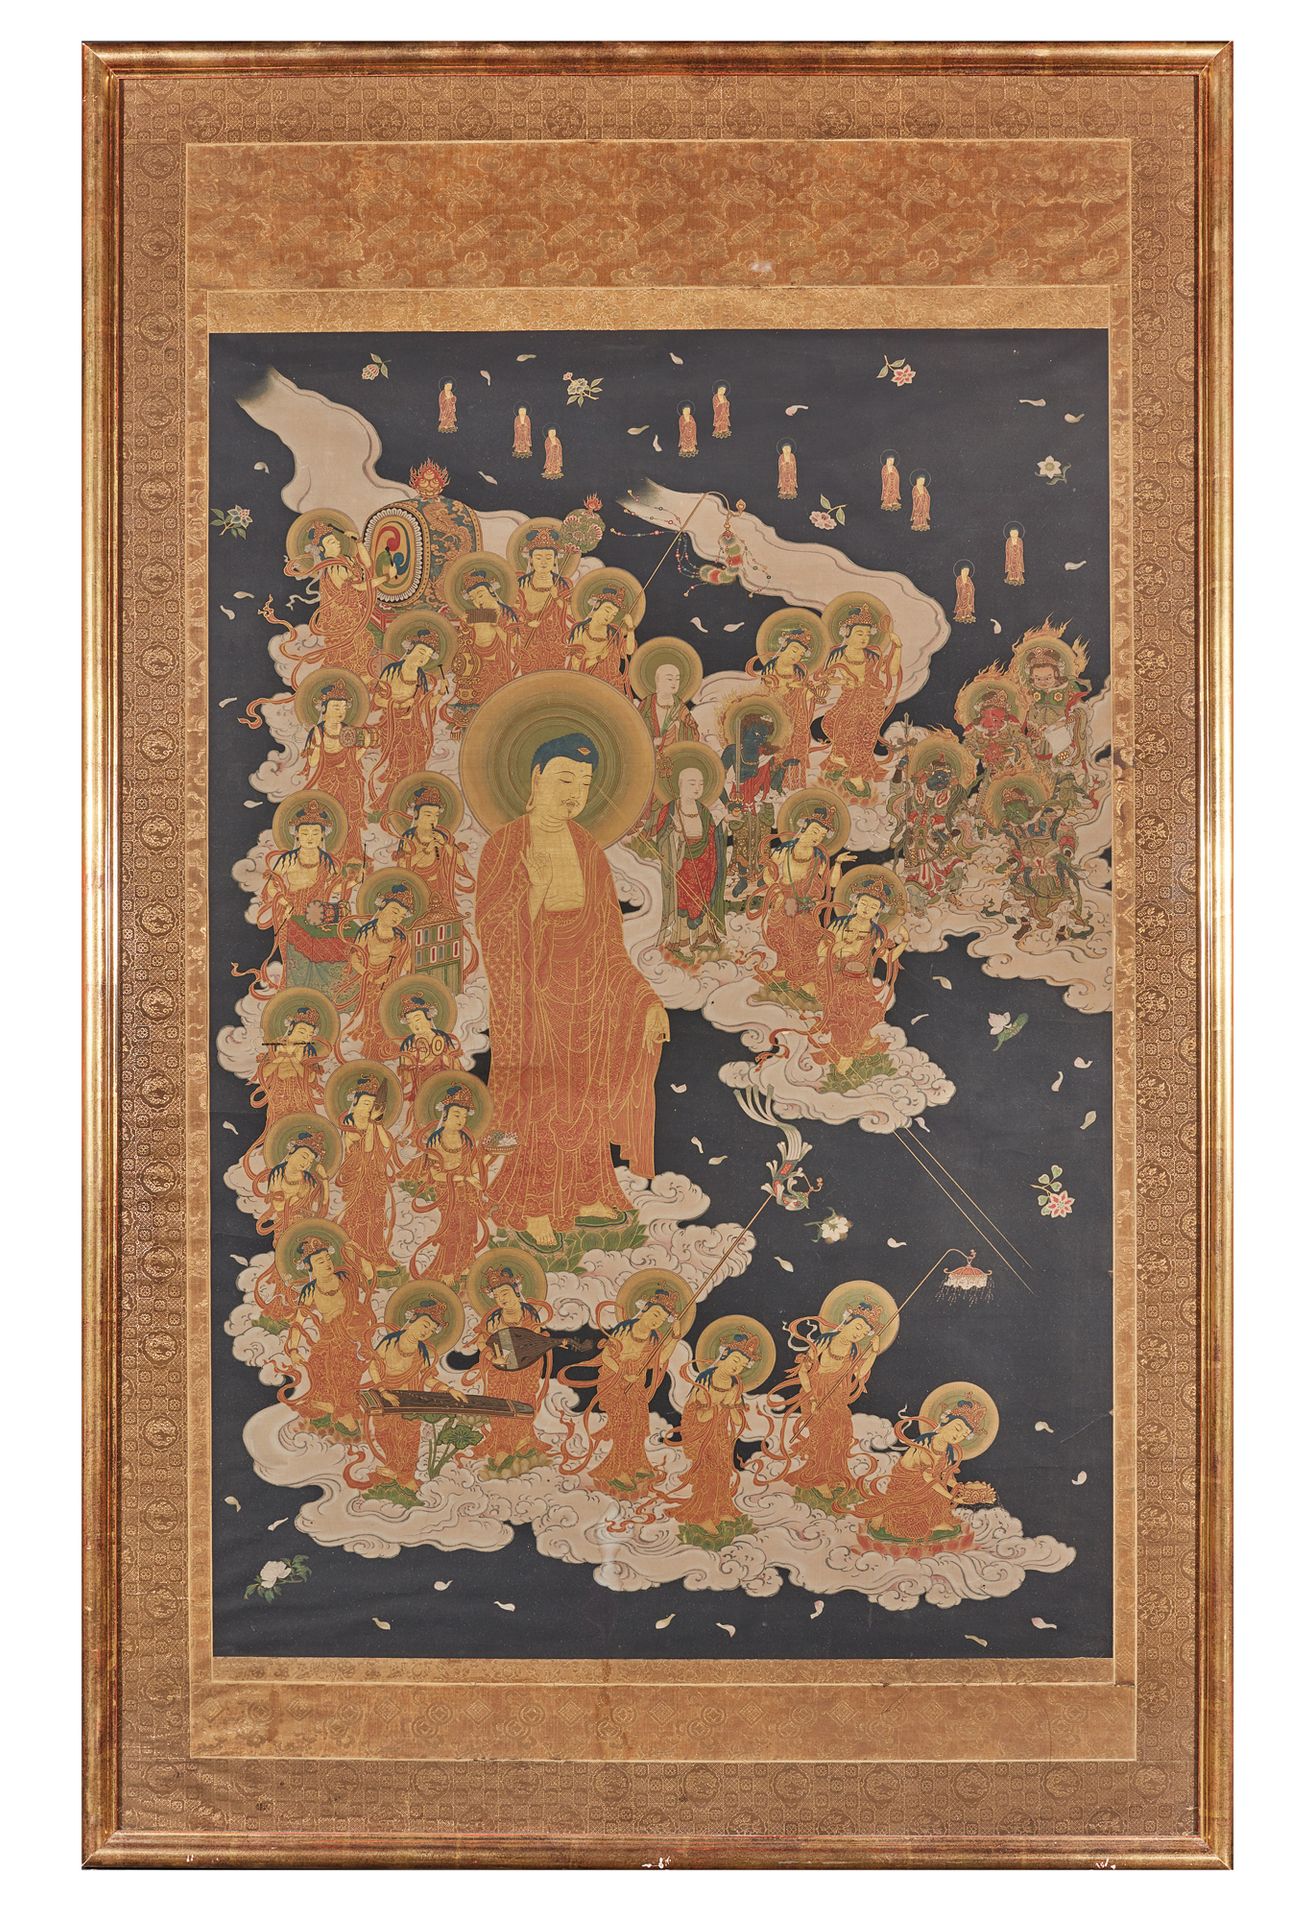 JAPON - Epoque EDO (1603 - 1868), XVIIIe siècle 阿米达-雷戈：阿米达的后裔。
绢本多色水墨
西方极乐世界的佛陀与&hellip;